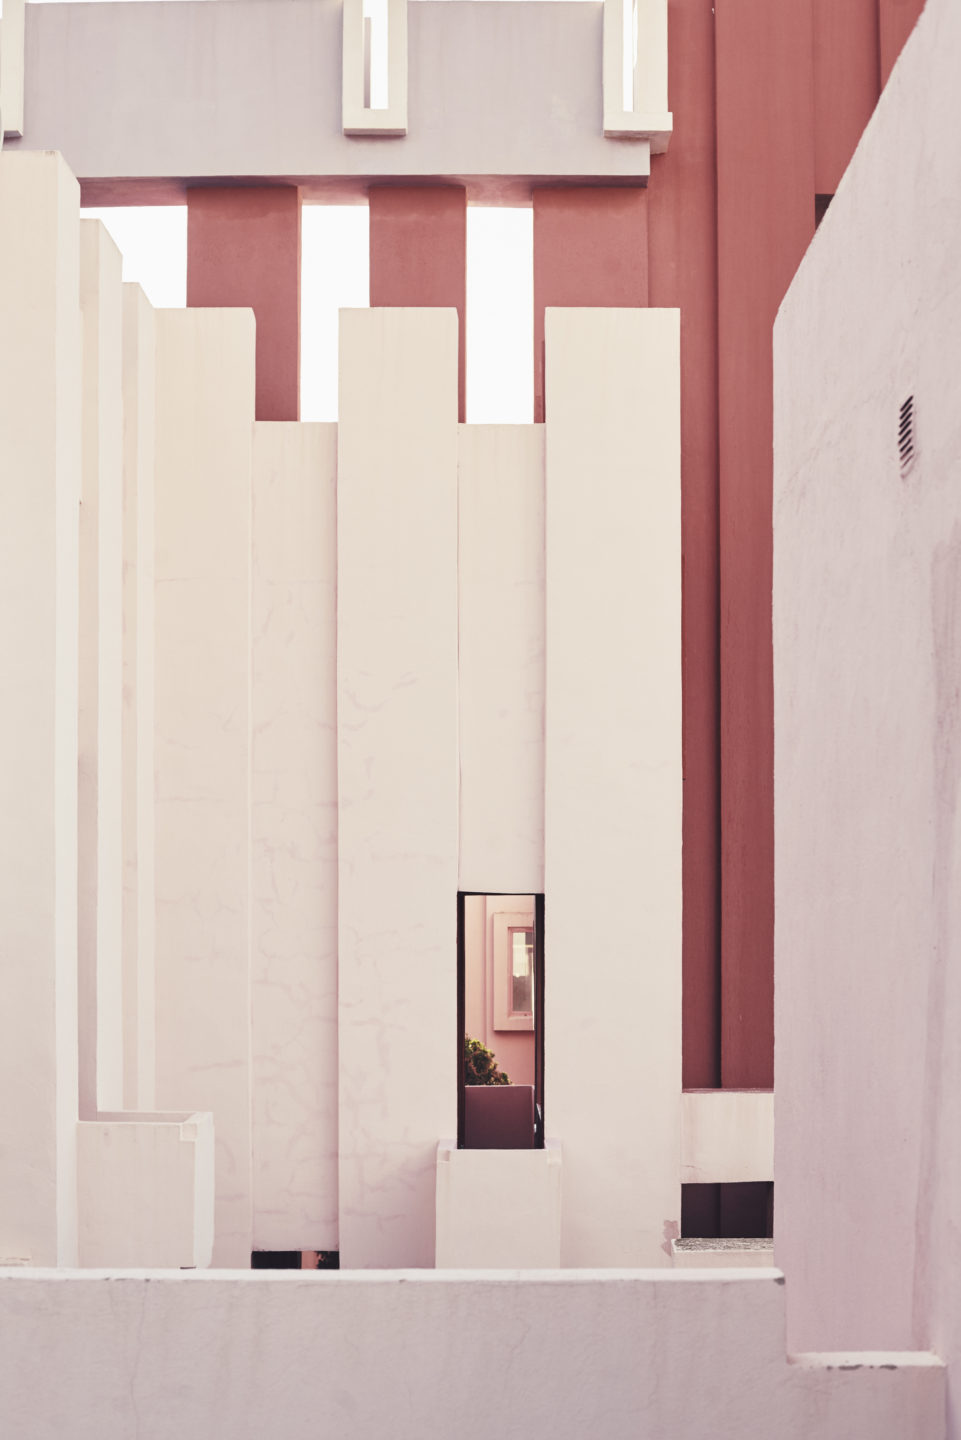 HANNAH SHELBY: Architect Ricardo Bofill's Masterpiece: La Muralla Roja